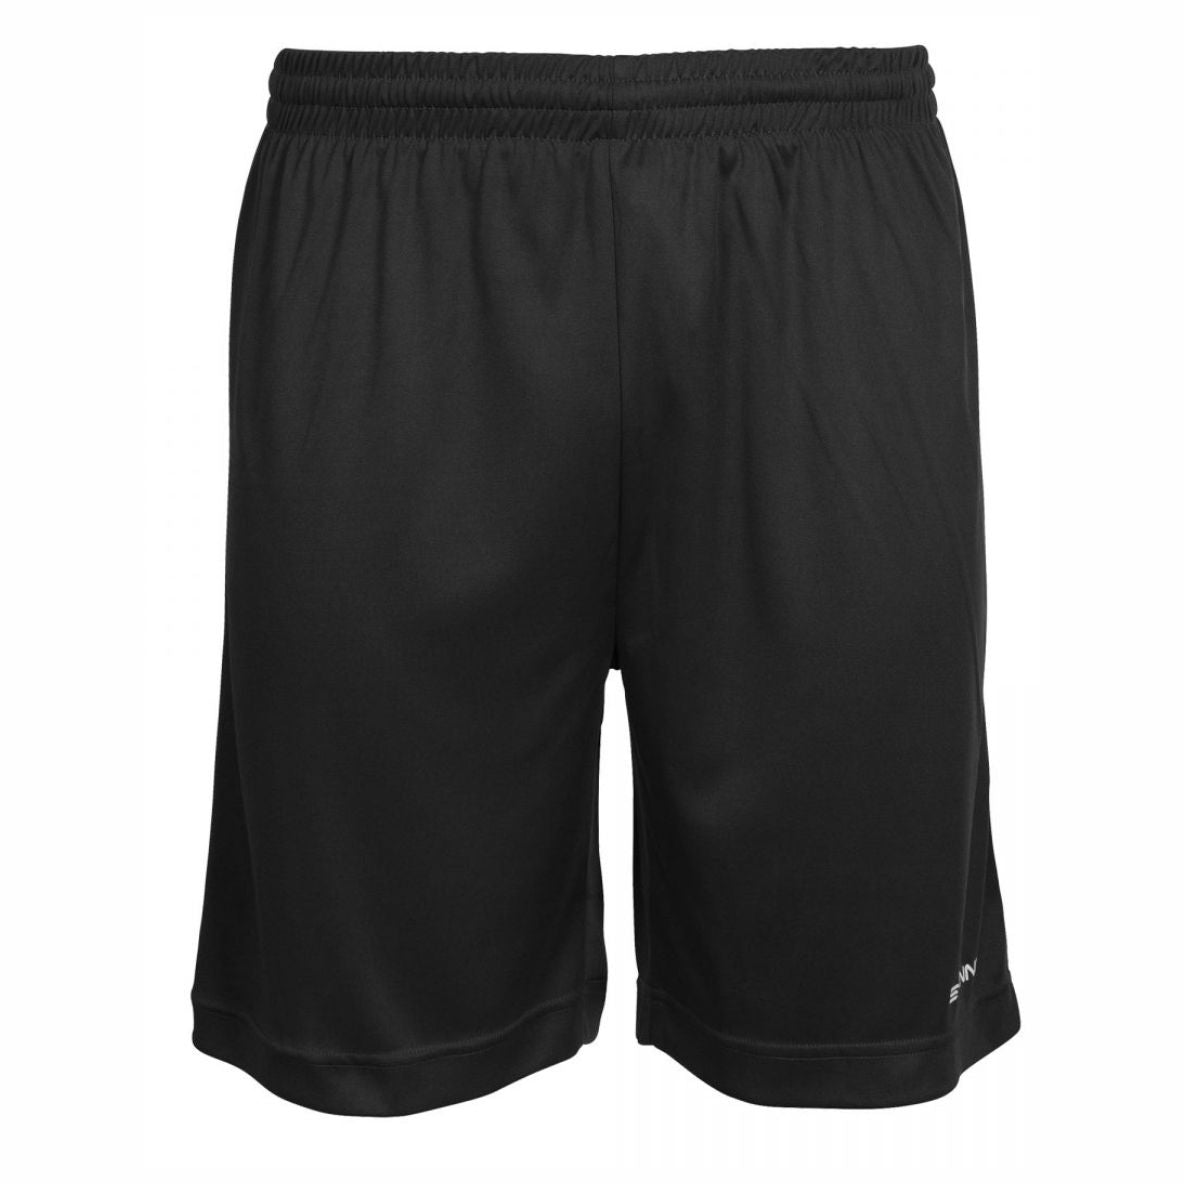 Stanno - Field Shorts - Black